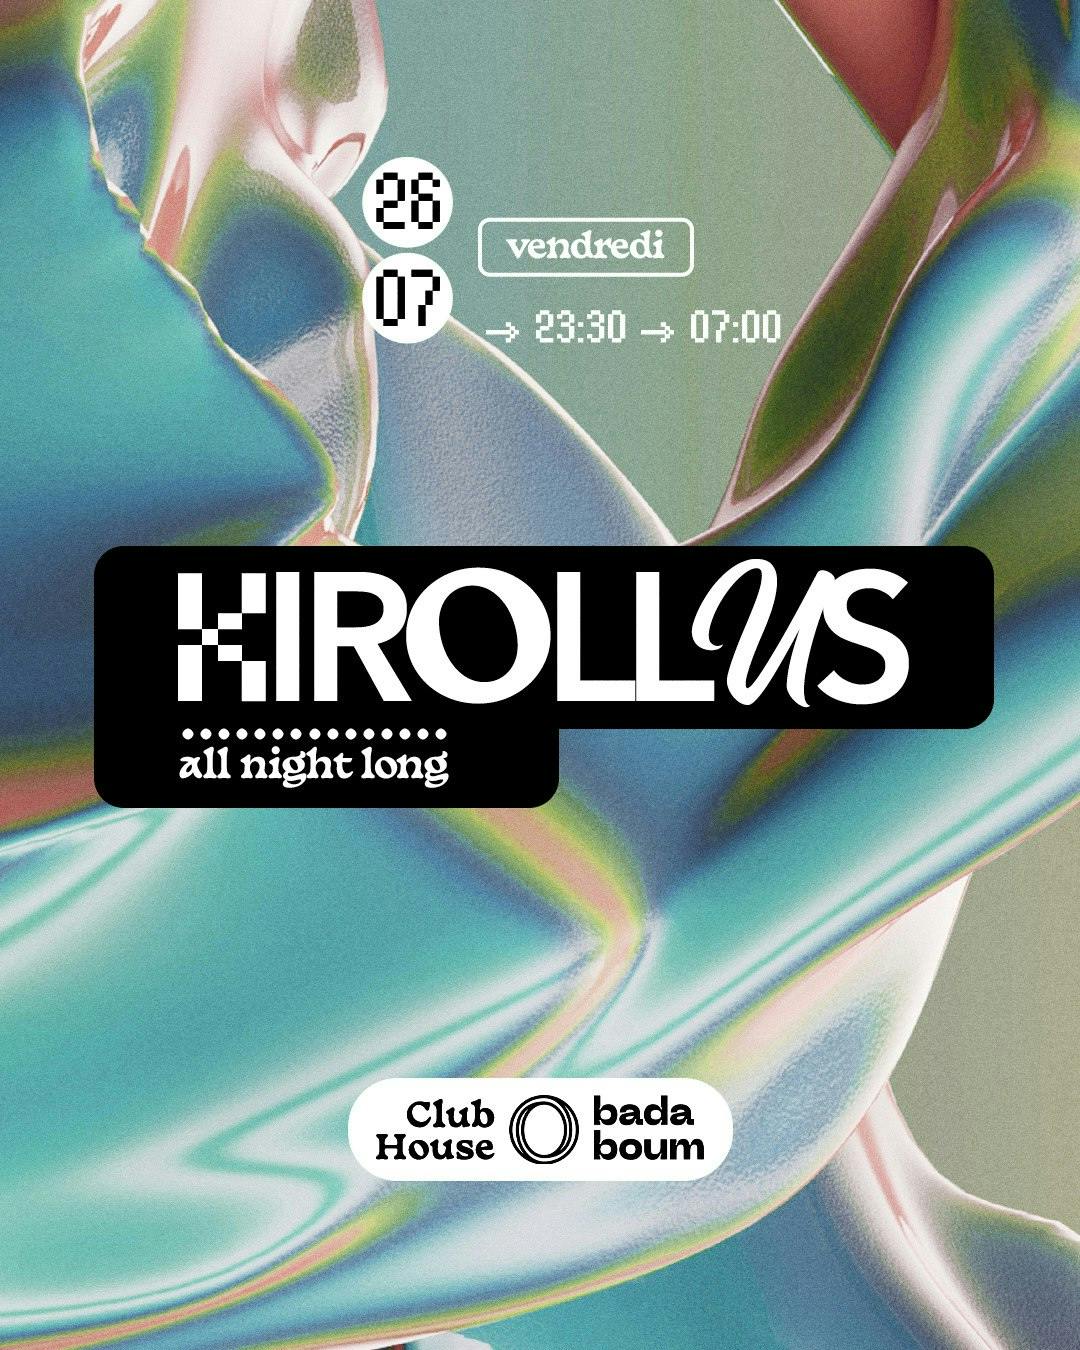 Club House — Kirollus (all night long)